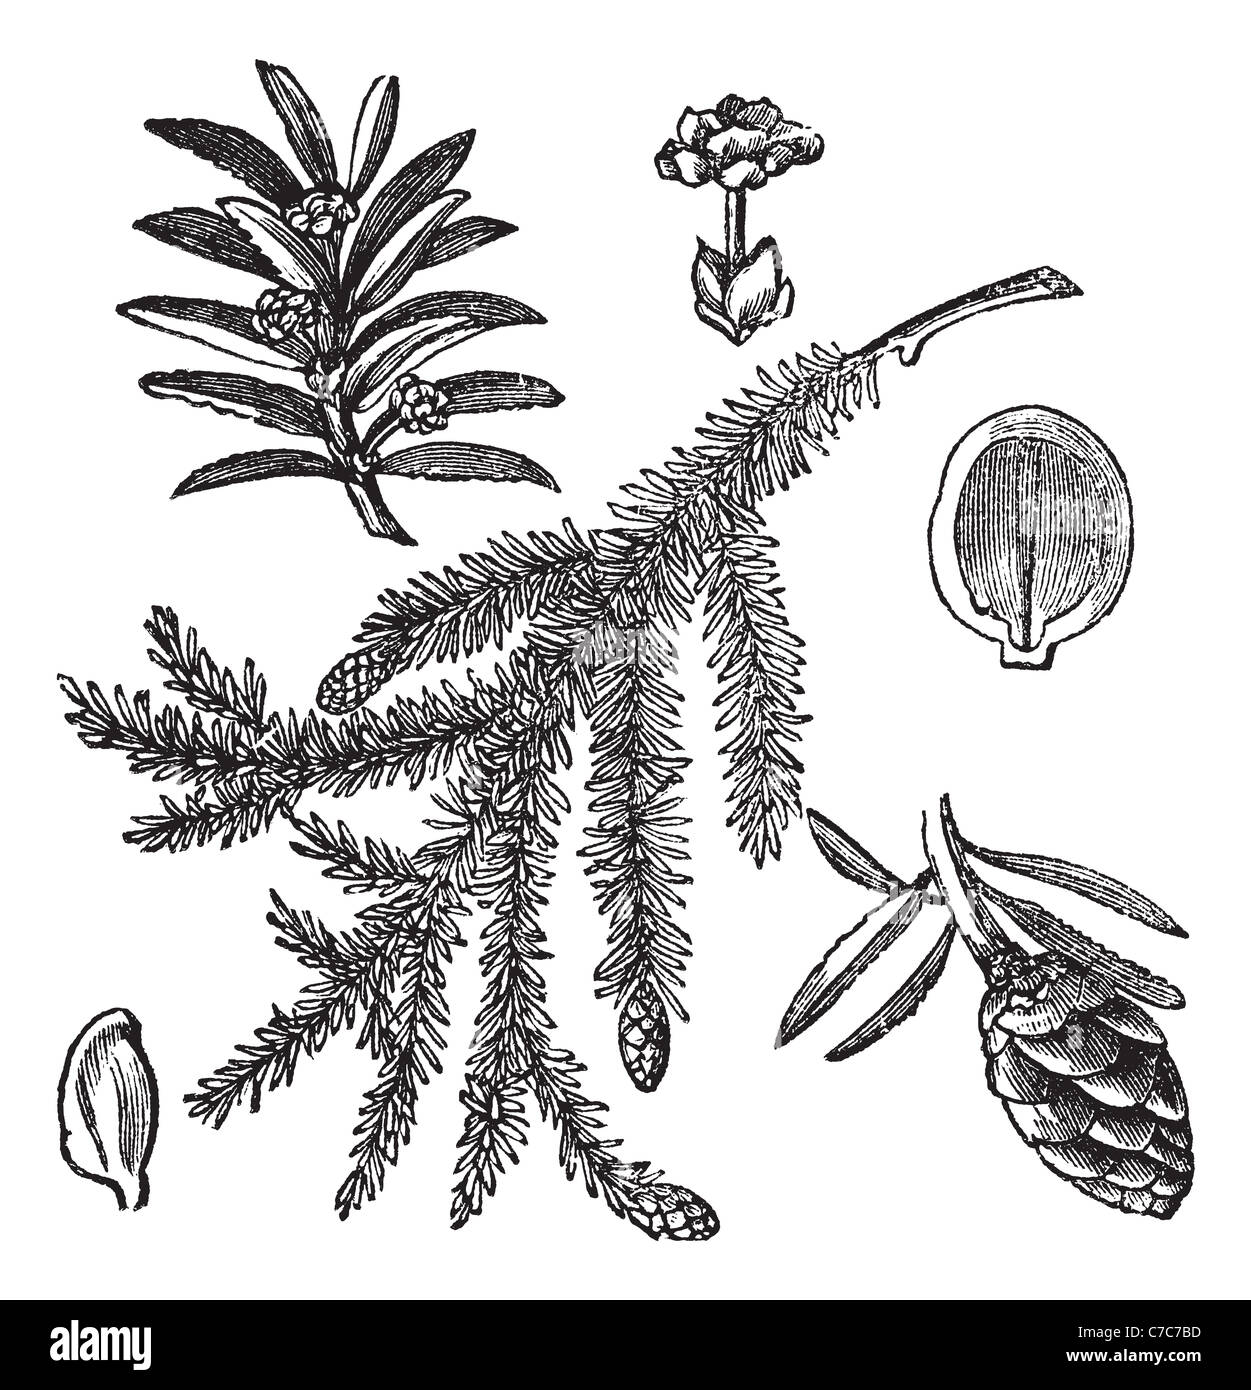 Canadian Hemlock or Eastern Hemlock, vintage engraving. Old engraved illustration of Canadian Hemlock isolated on a white. Stock Photo